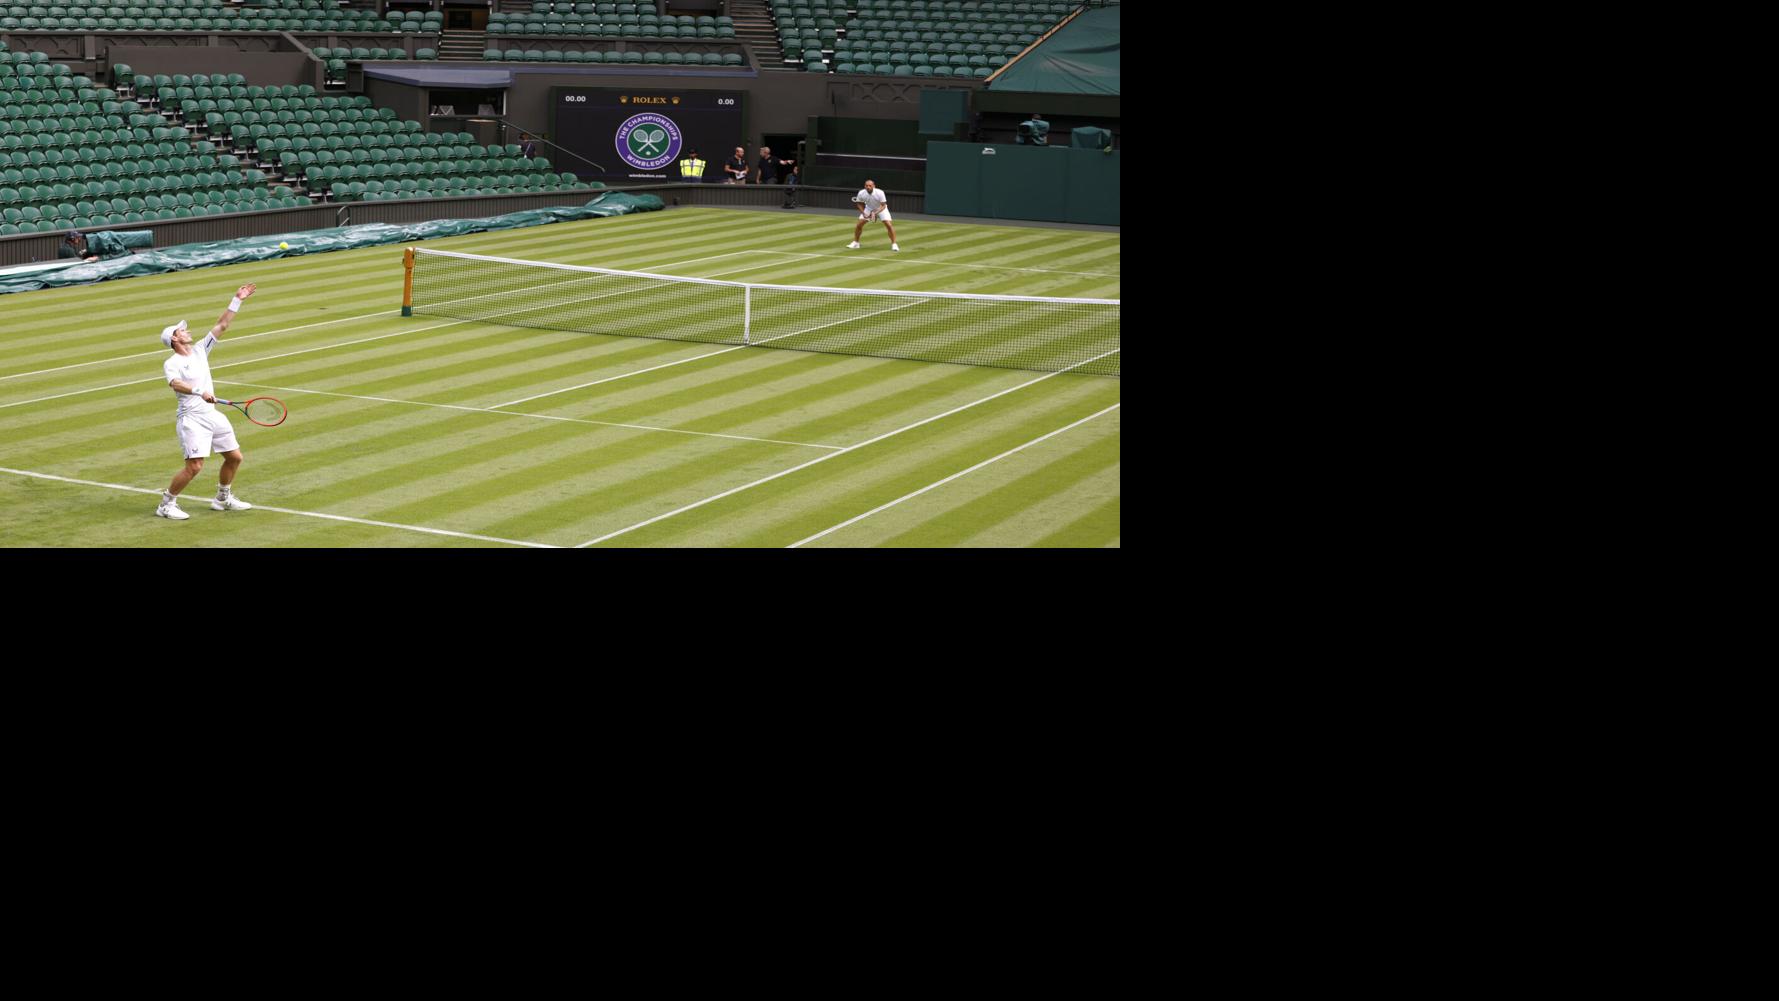 Venus Williams will begin her 24th Wimbledon tourney against Svitolina